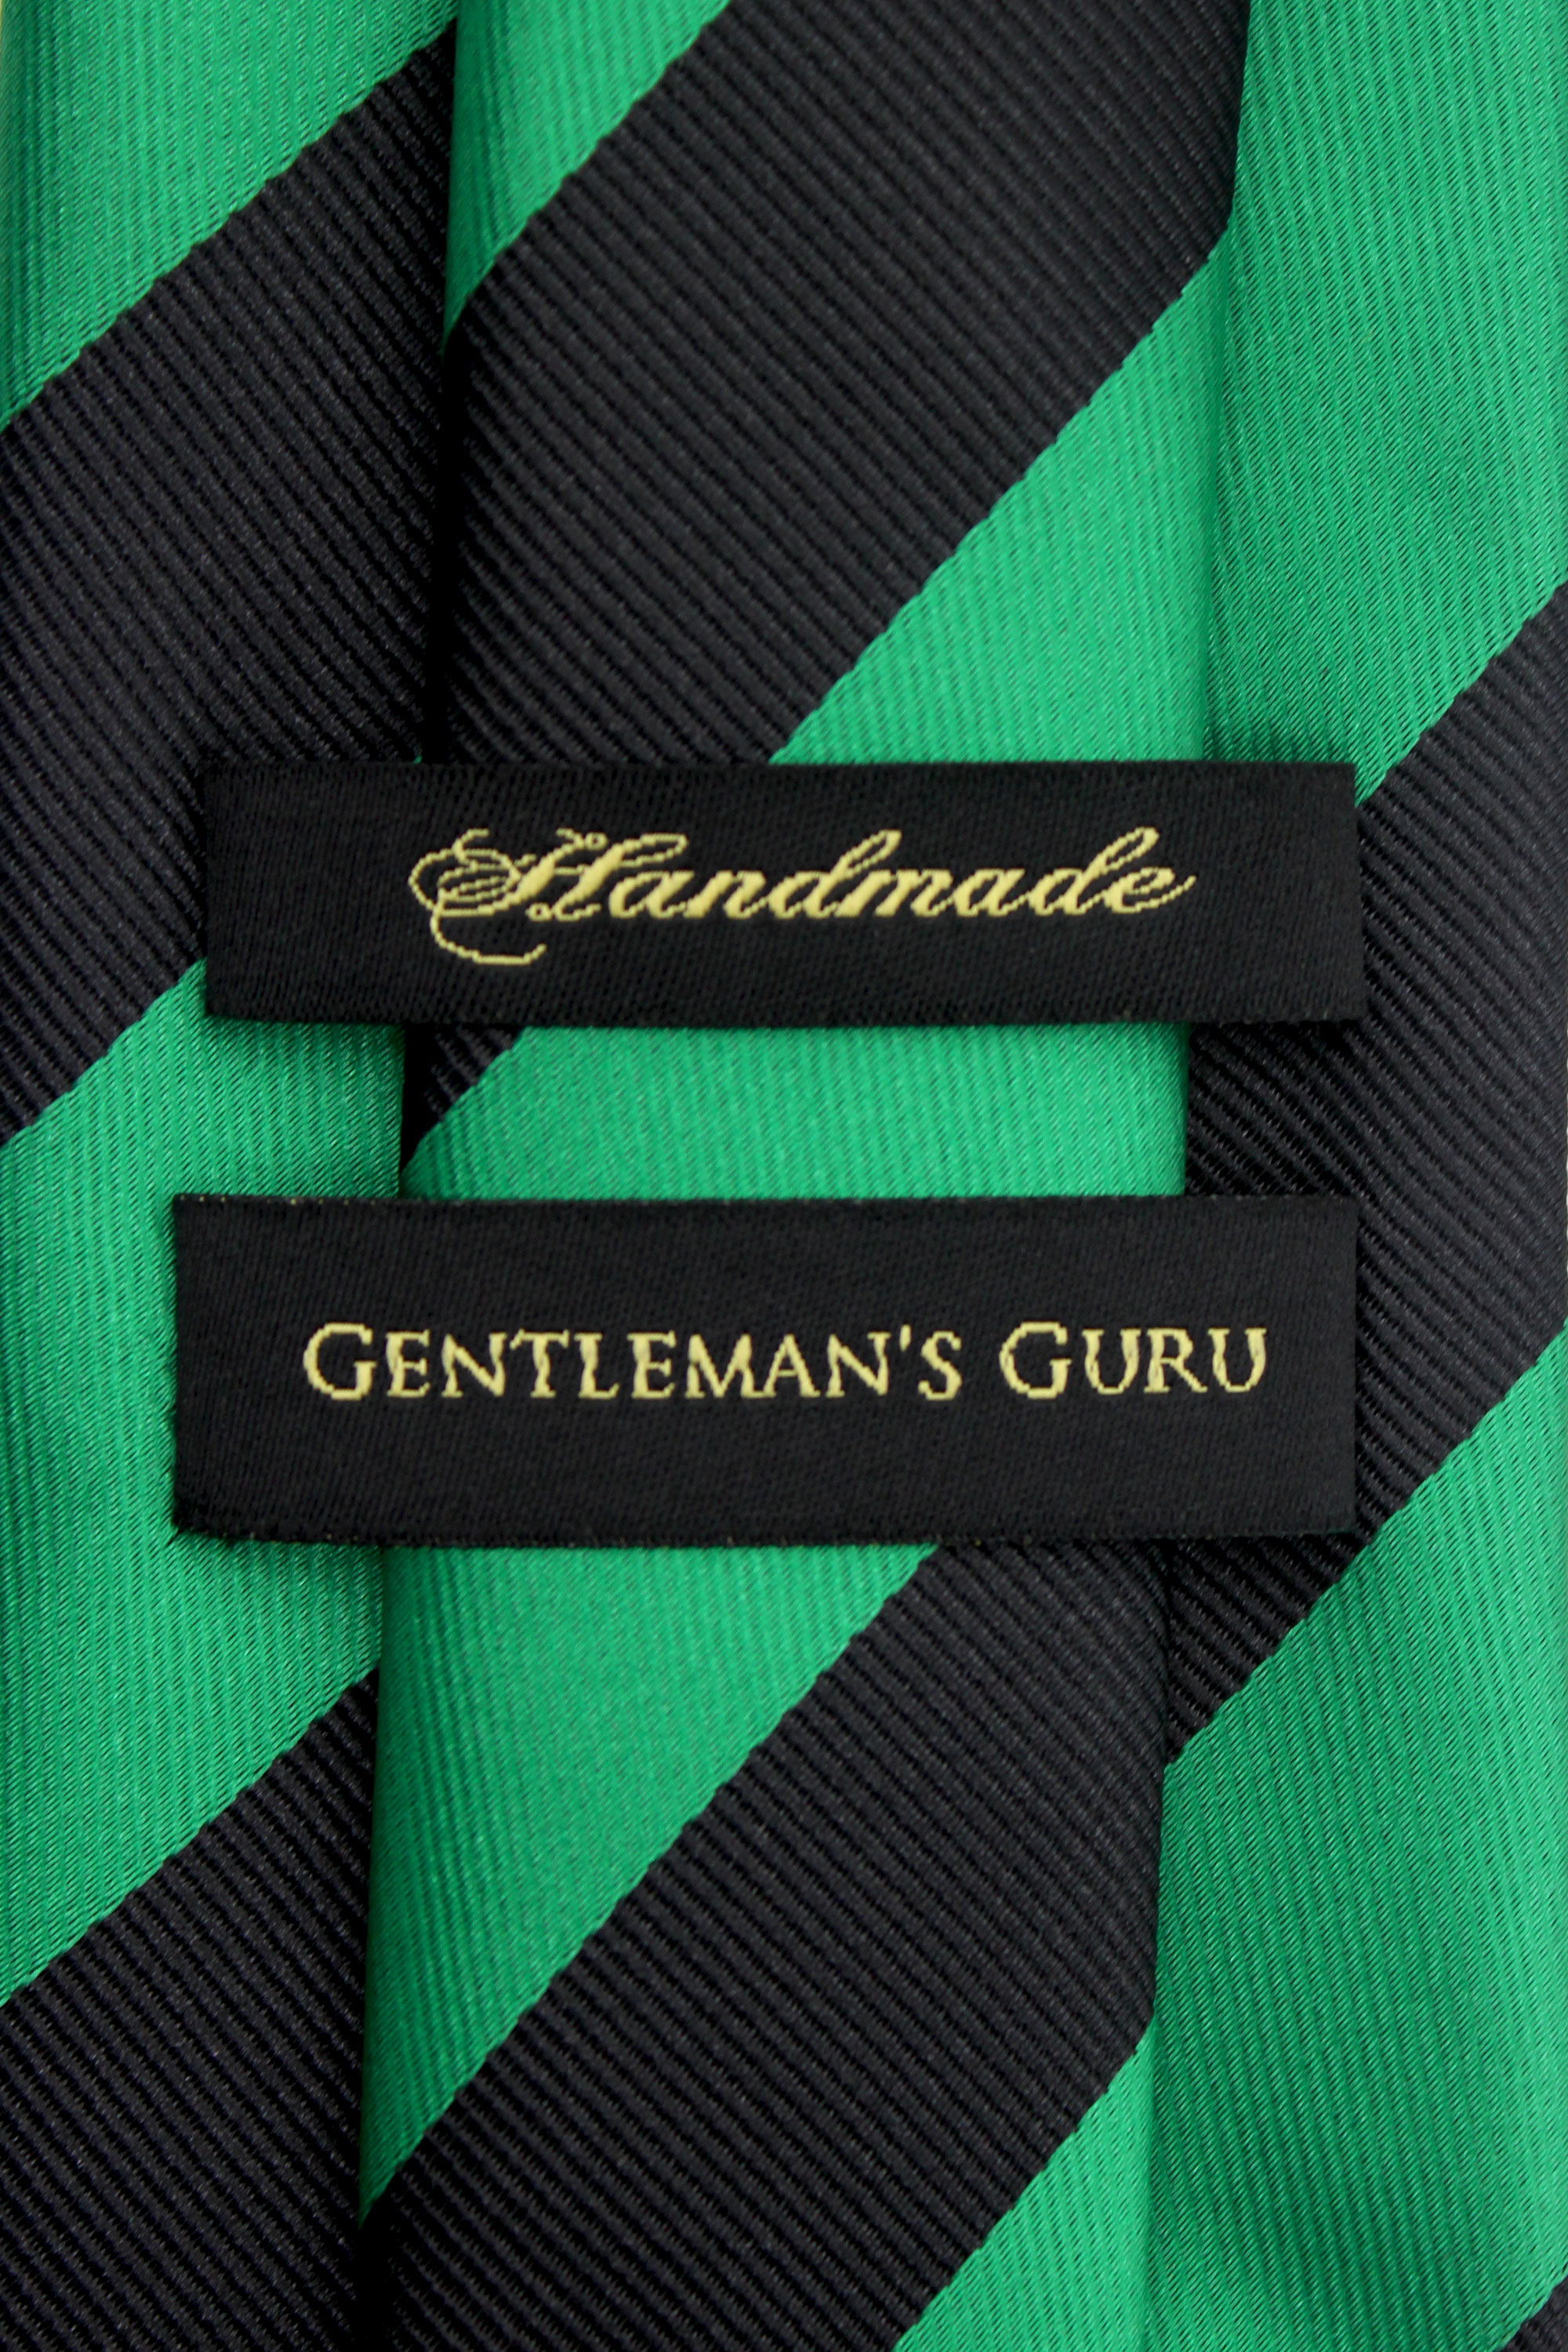 Green-and-Black-Striped-Branded-Tie-from-Gentlemansguru.com